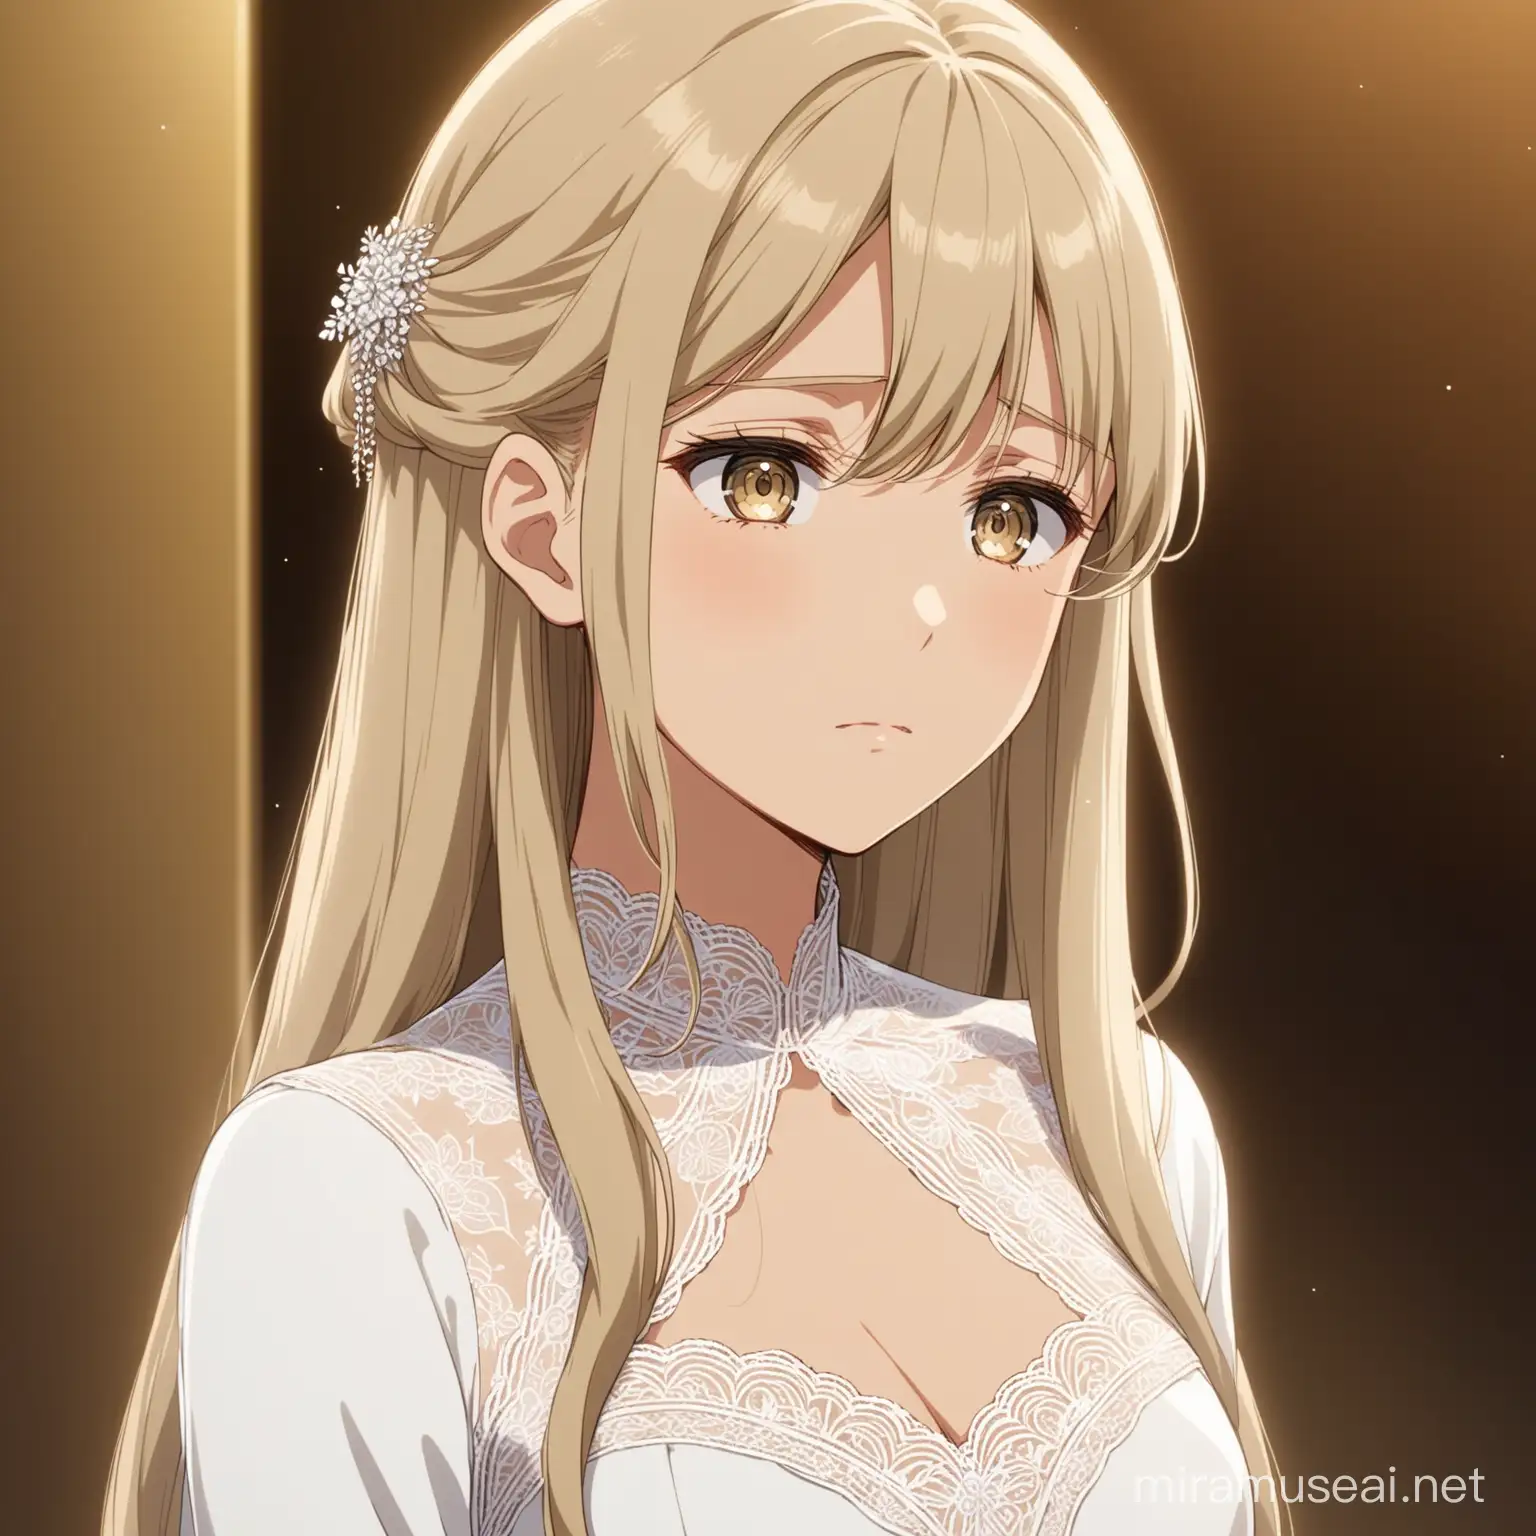 Anime Woman with Ash Blonde Hair in Elegant White Dress Portrait of Sad Hopefulness